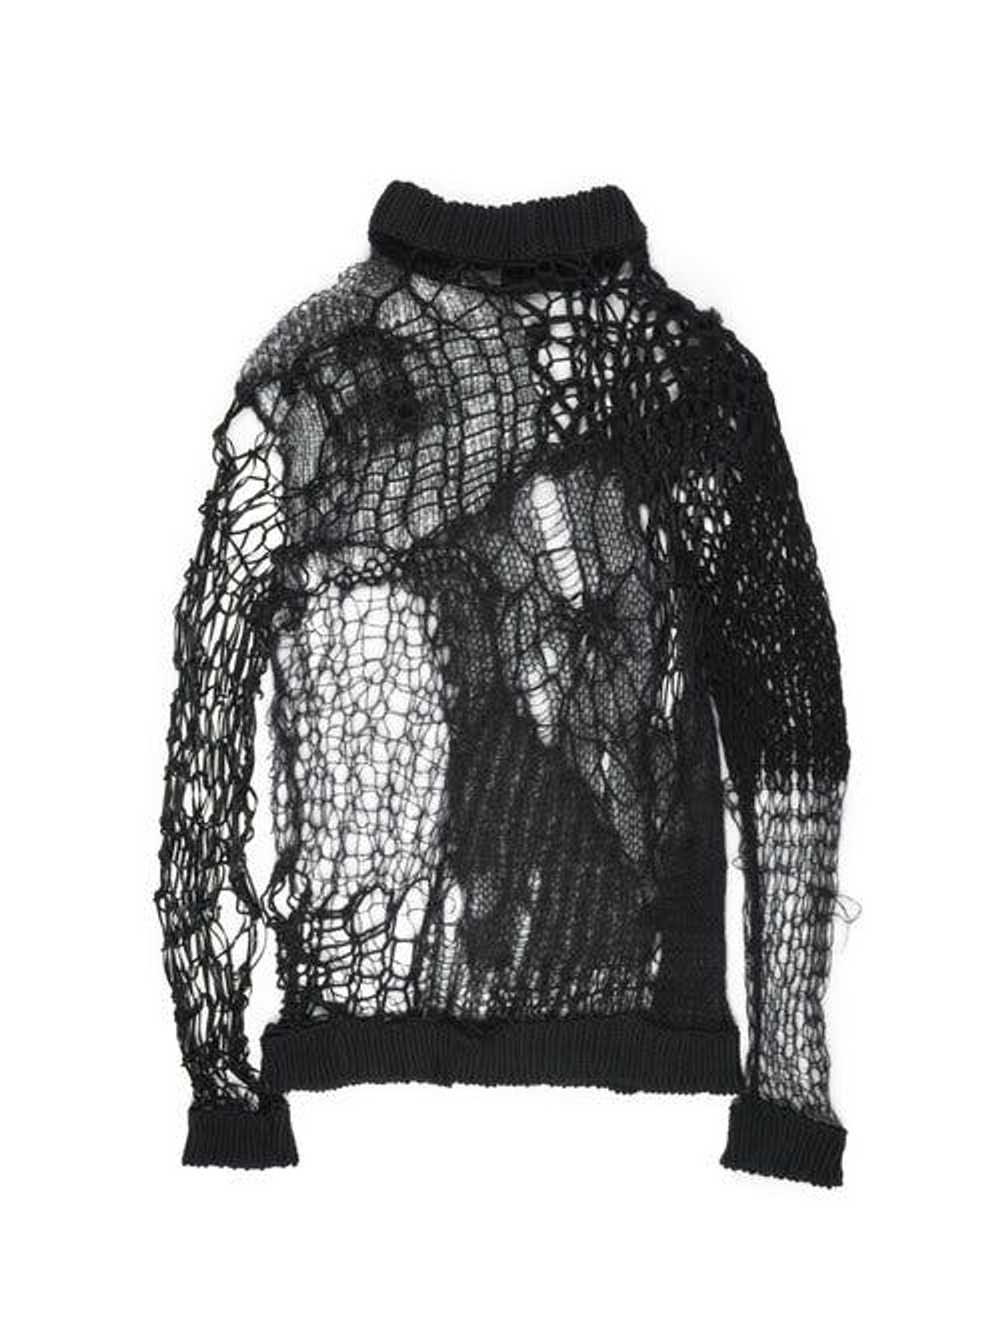 Raf Simons AW1998 Spiderweb Sweater - image 2